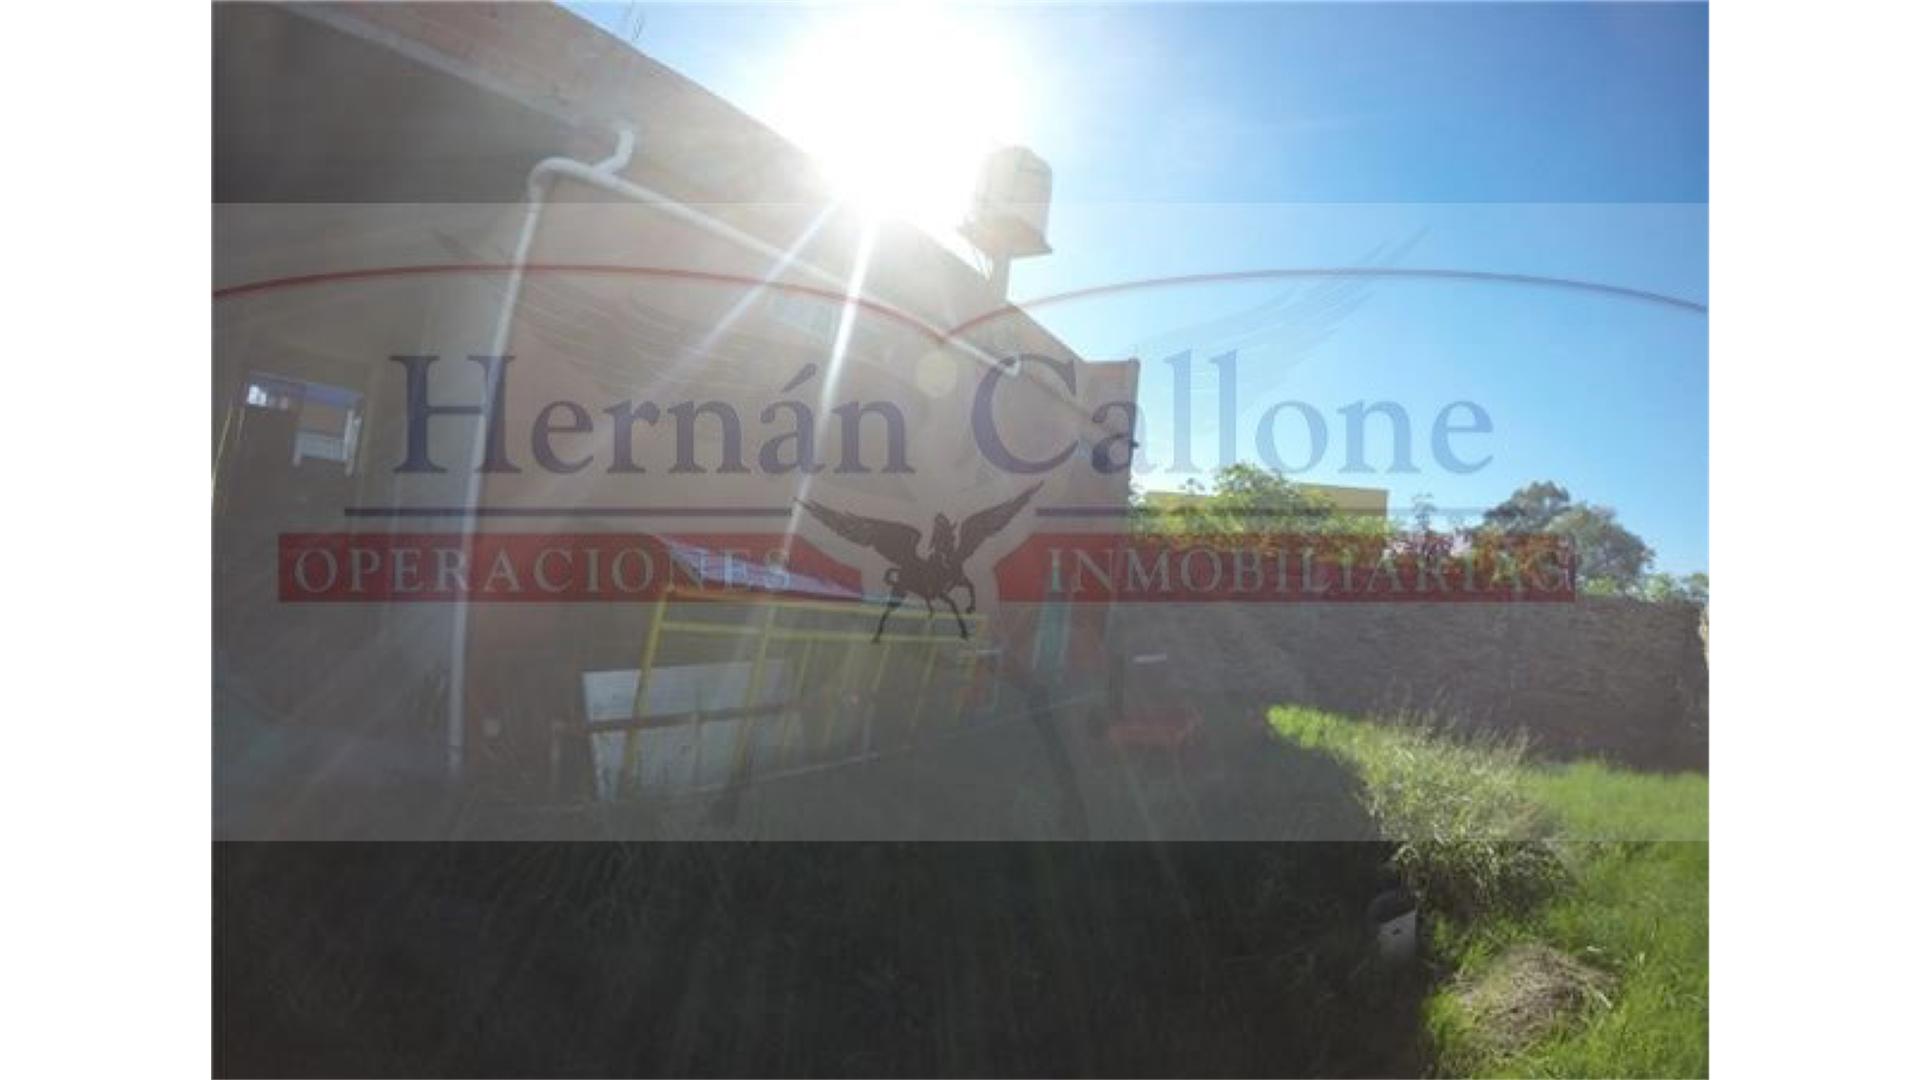 #919185 | Venta | Local | Moron (Hernan Callone Operaciones Inmobiliarias)